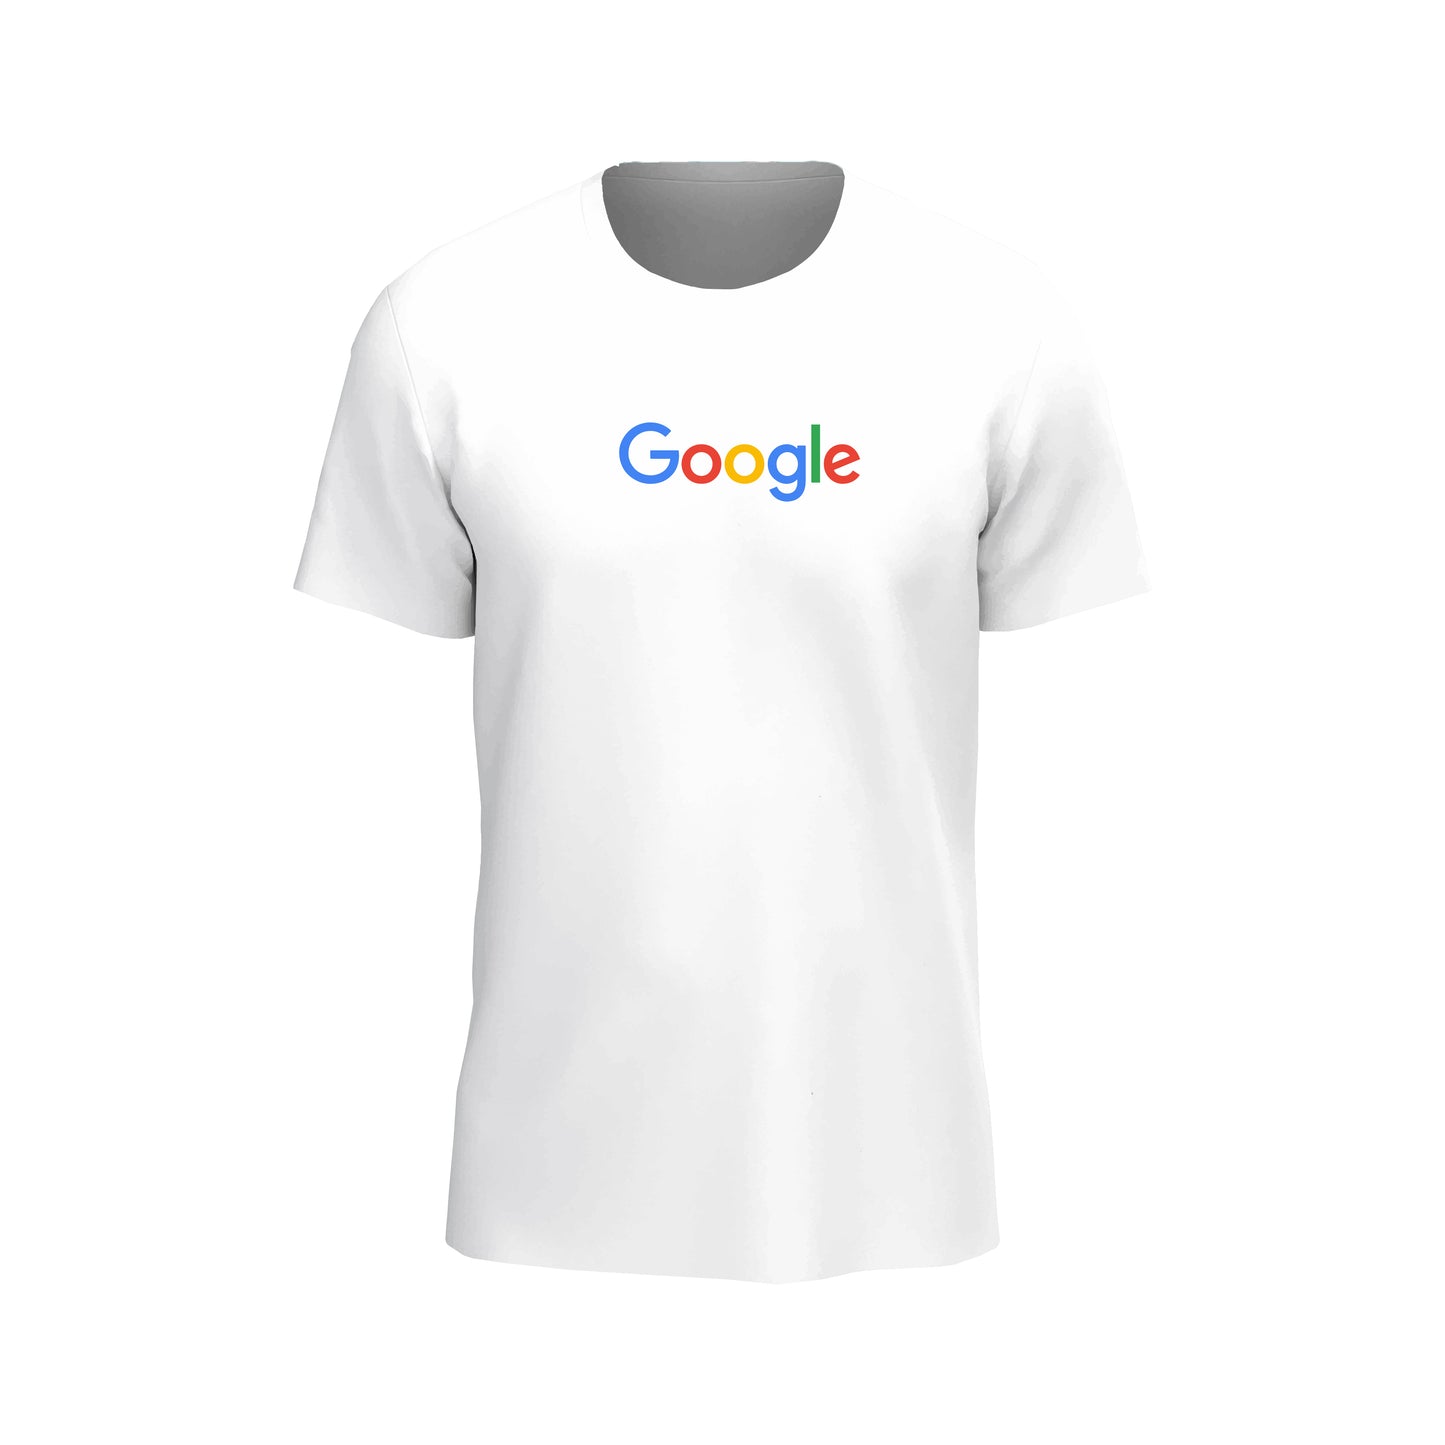 Google - T-Shirt -  Model 1